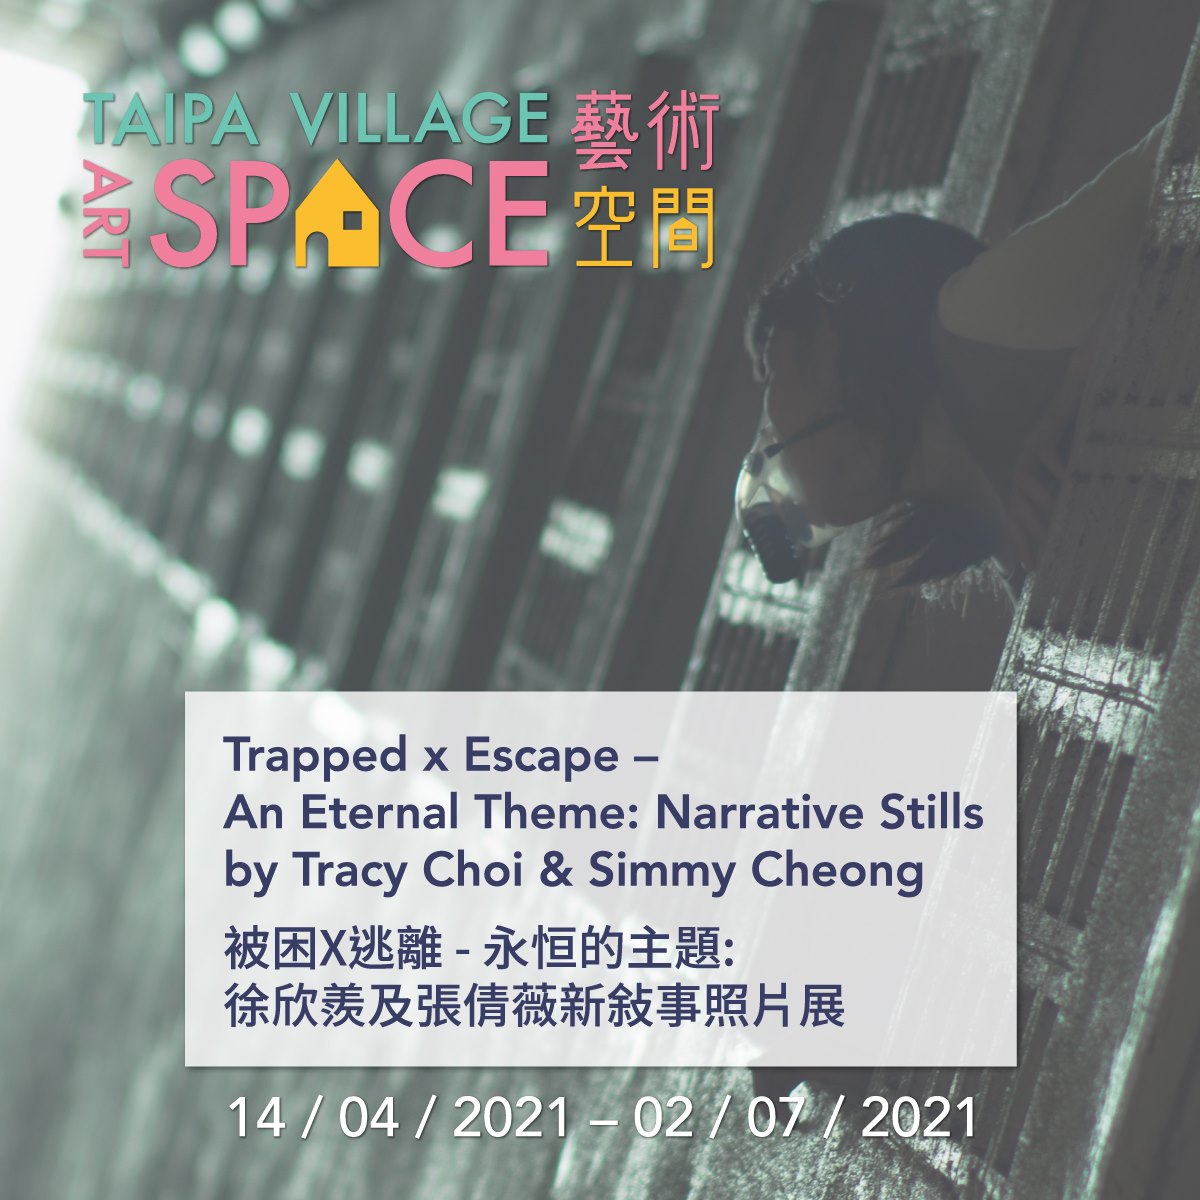 Taipa Village Exhibition April 2021 Poster